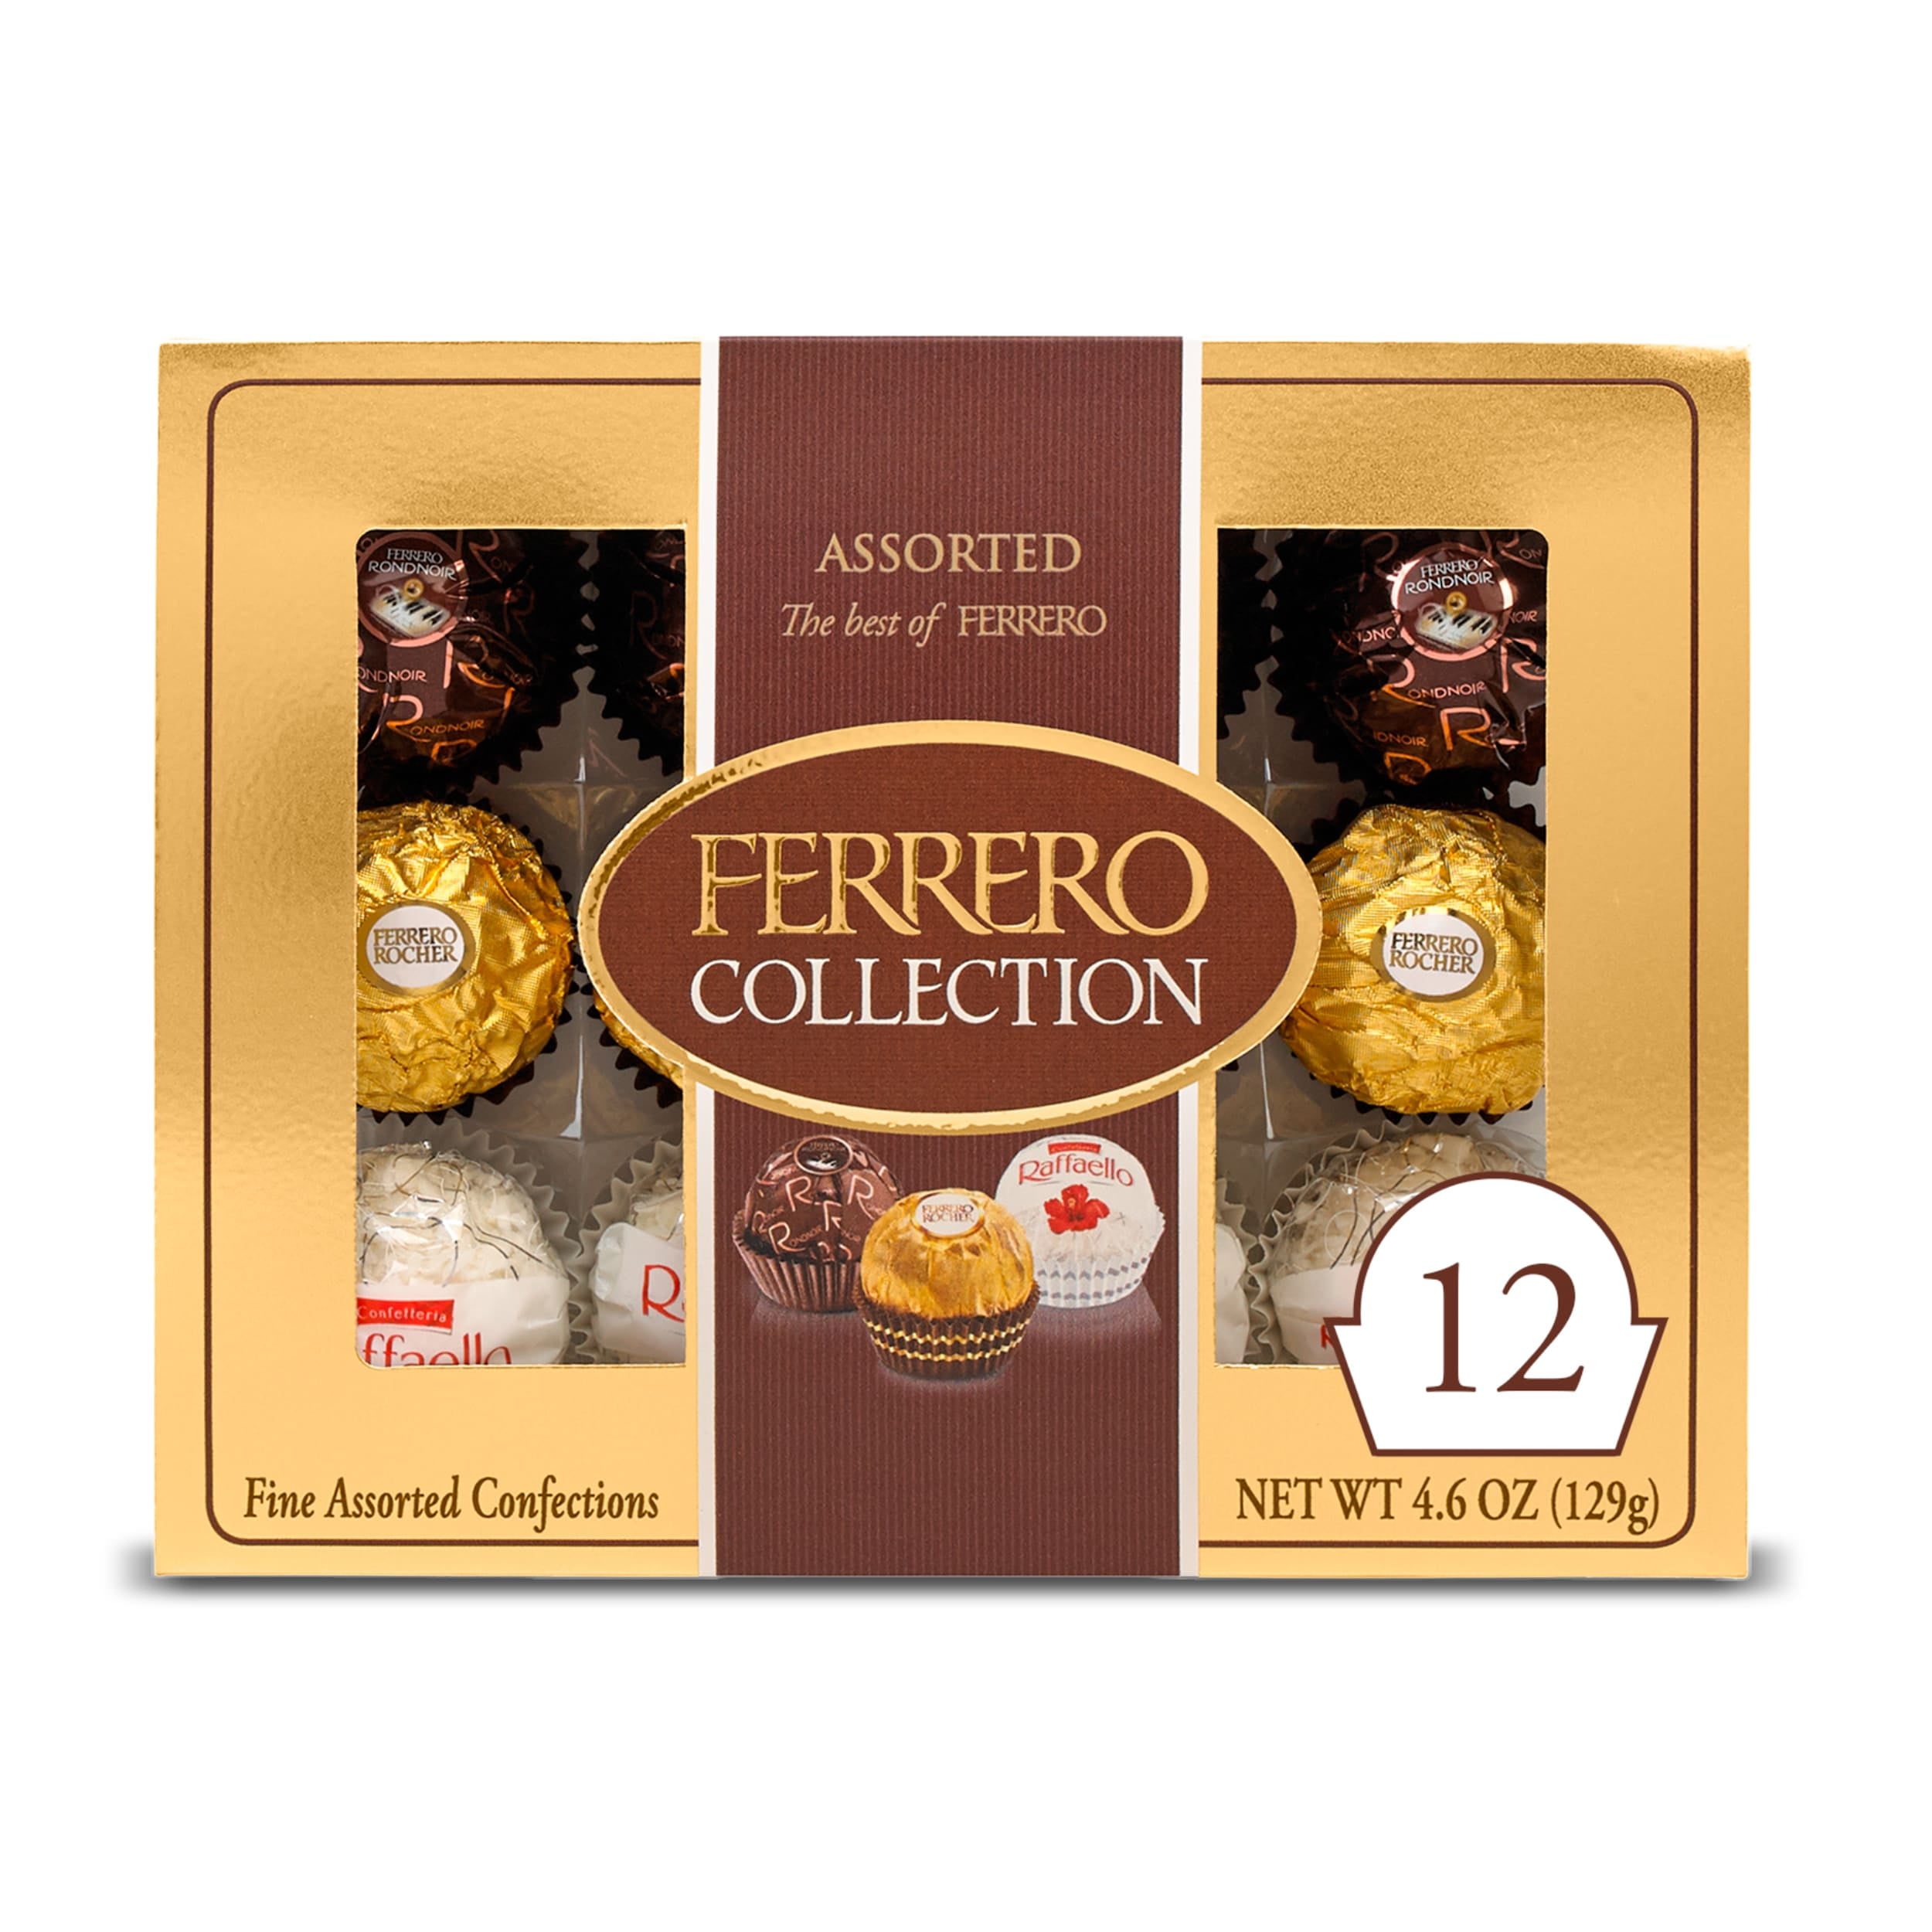 Ferrero Collection Hazelnut And Coconut, 12 Milk Count Assorted And Dark Premium Chocolate